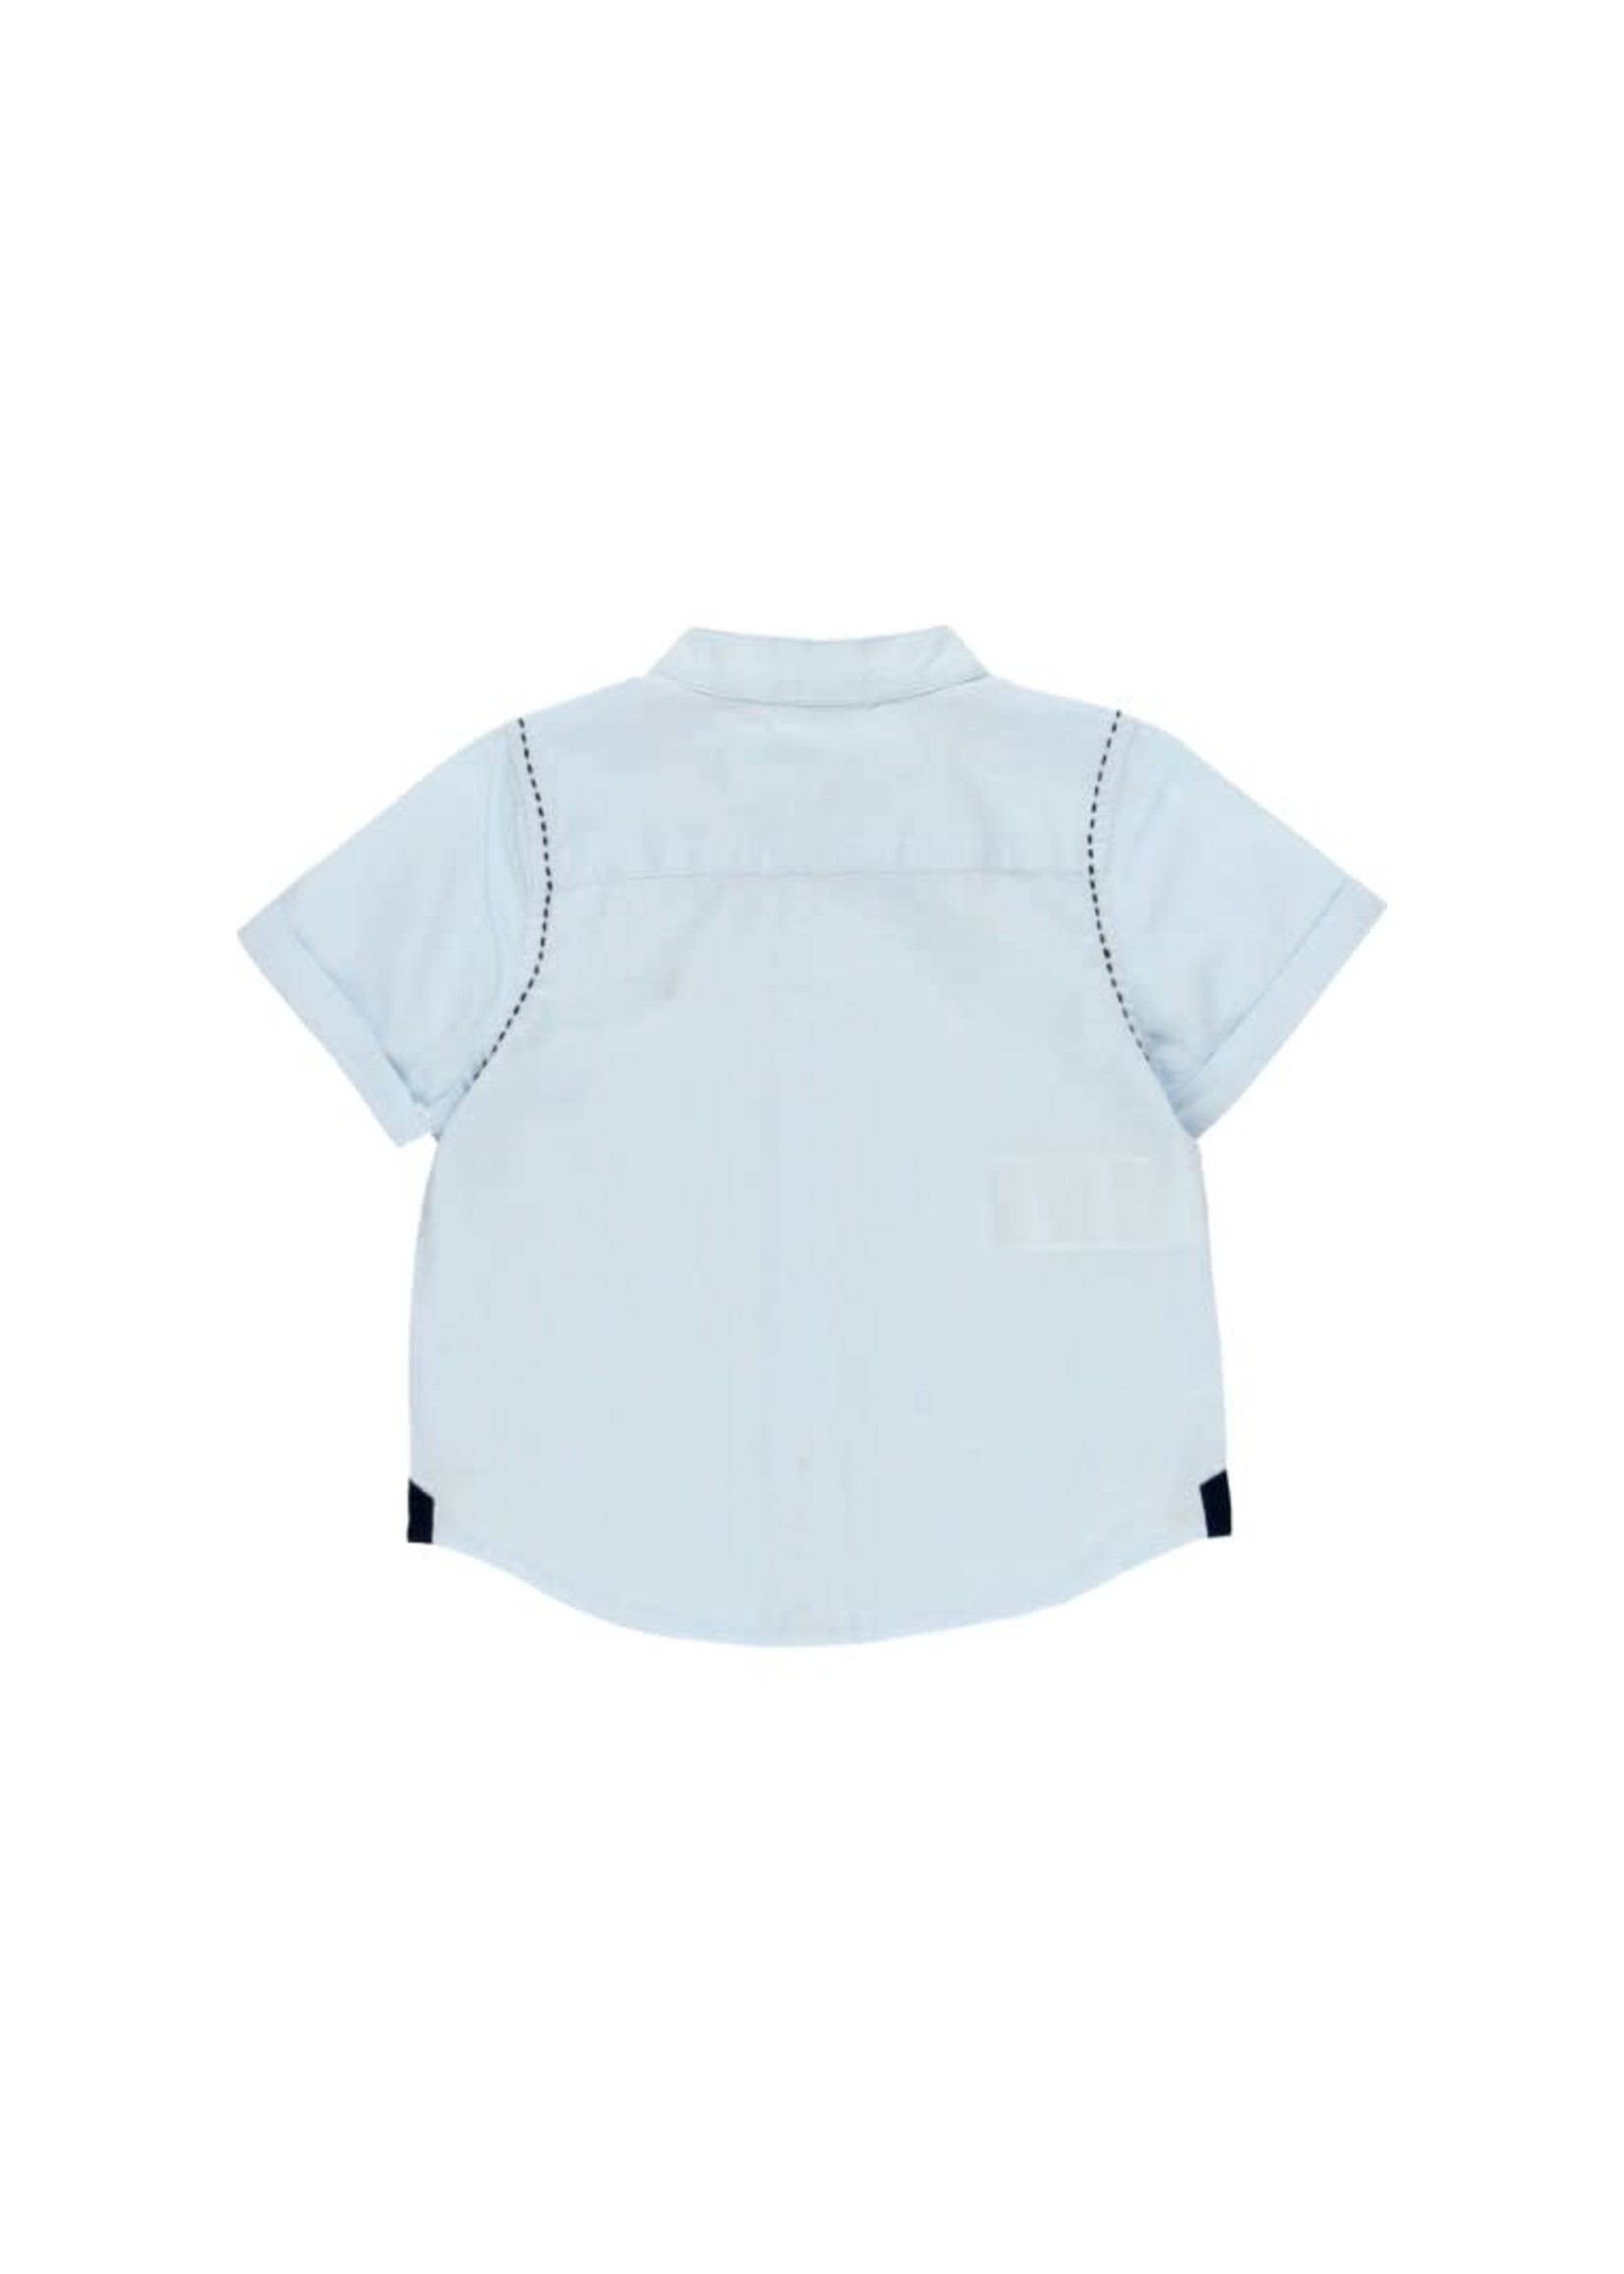 Boboli Boboli Shirt short sleeves for baby BLUE 714204